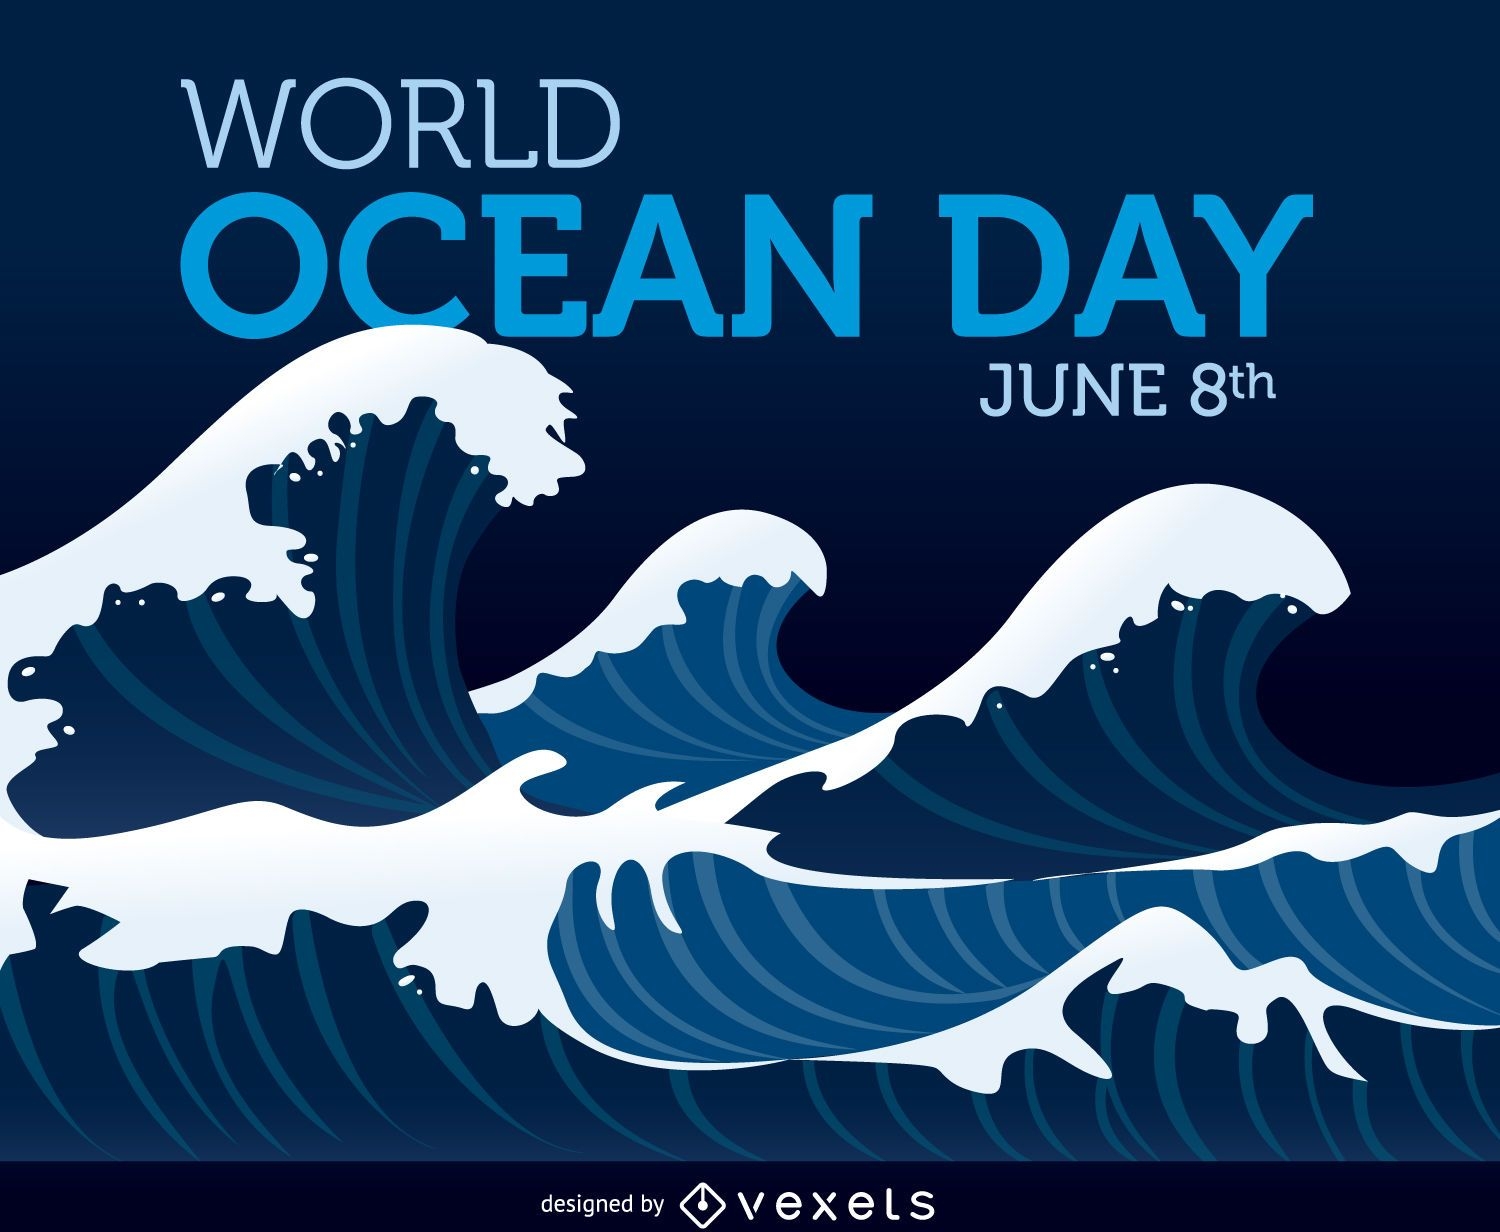 World Ocean Day poster